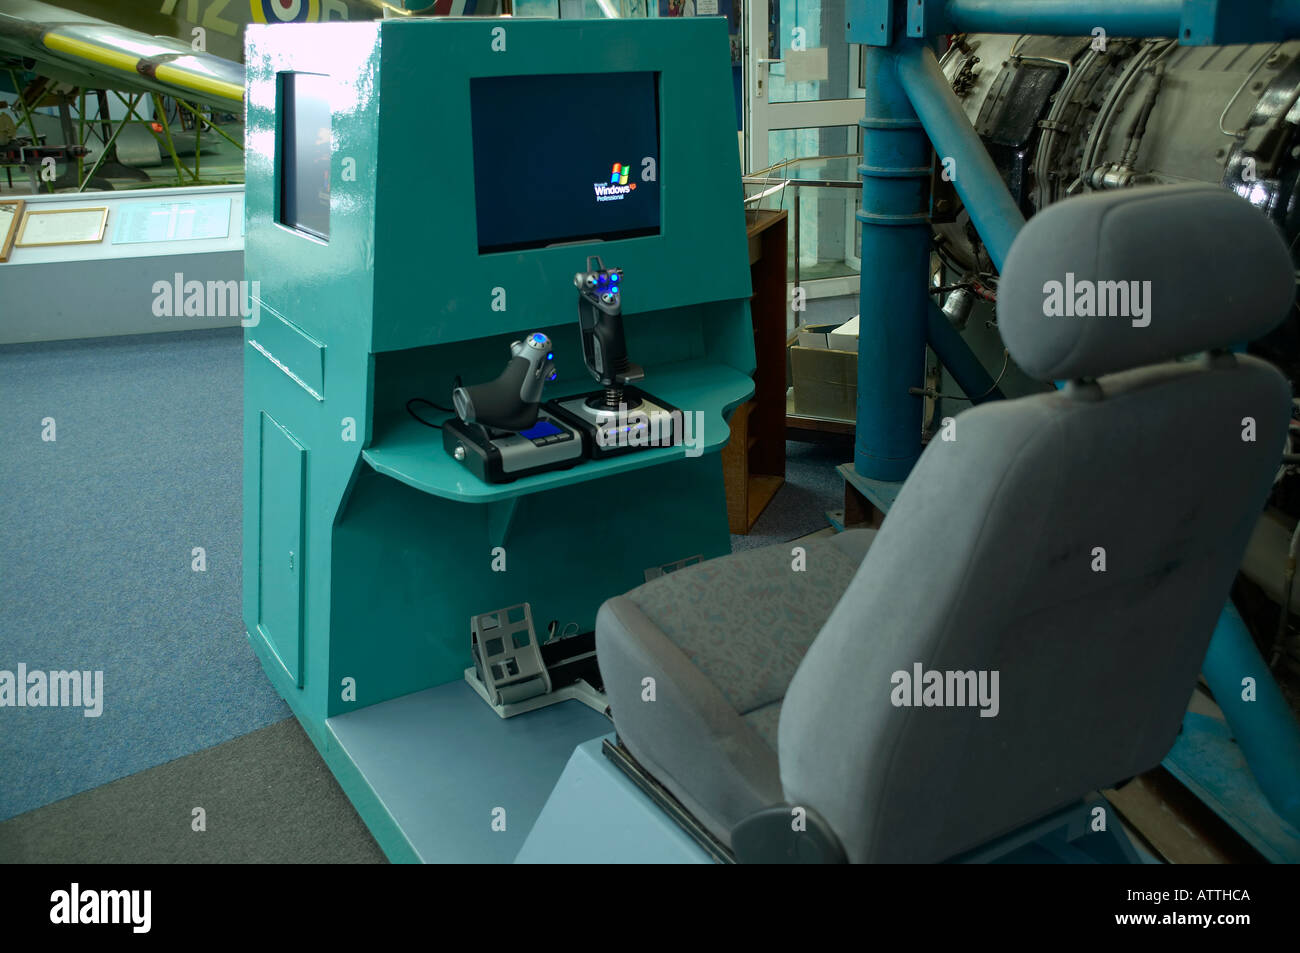 Microsoft Flight Simulator Joystick Stock Photo - Alamy